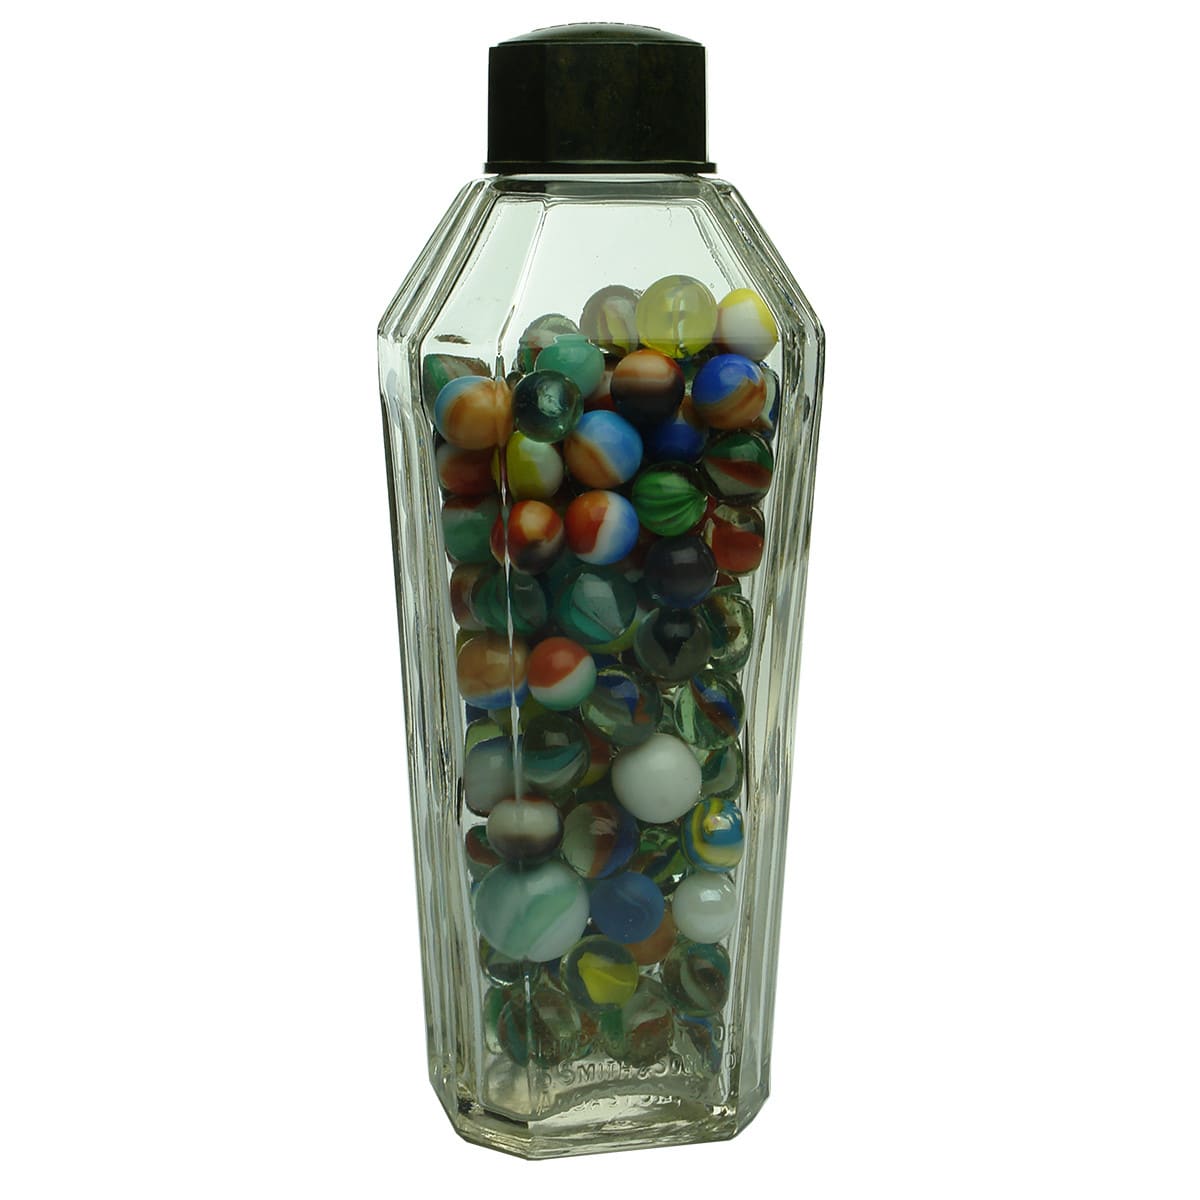 Miscellaneous. S. Smith, Angaston, Yalumba Niblik jar full of marbles. (South Australia)